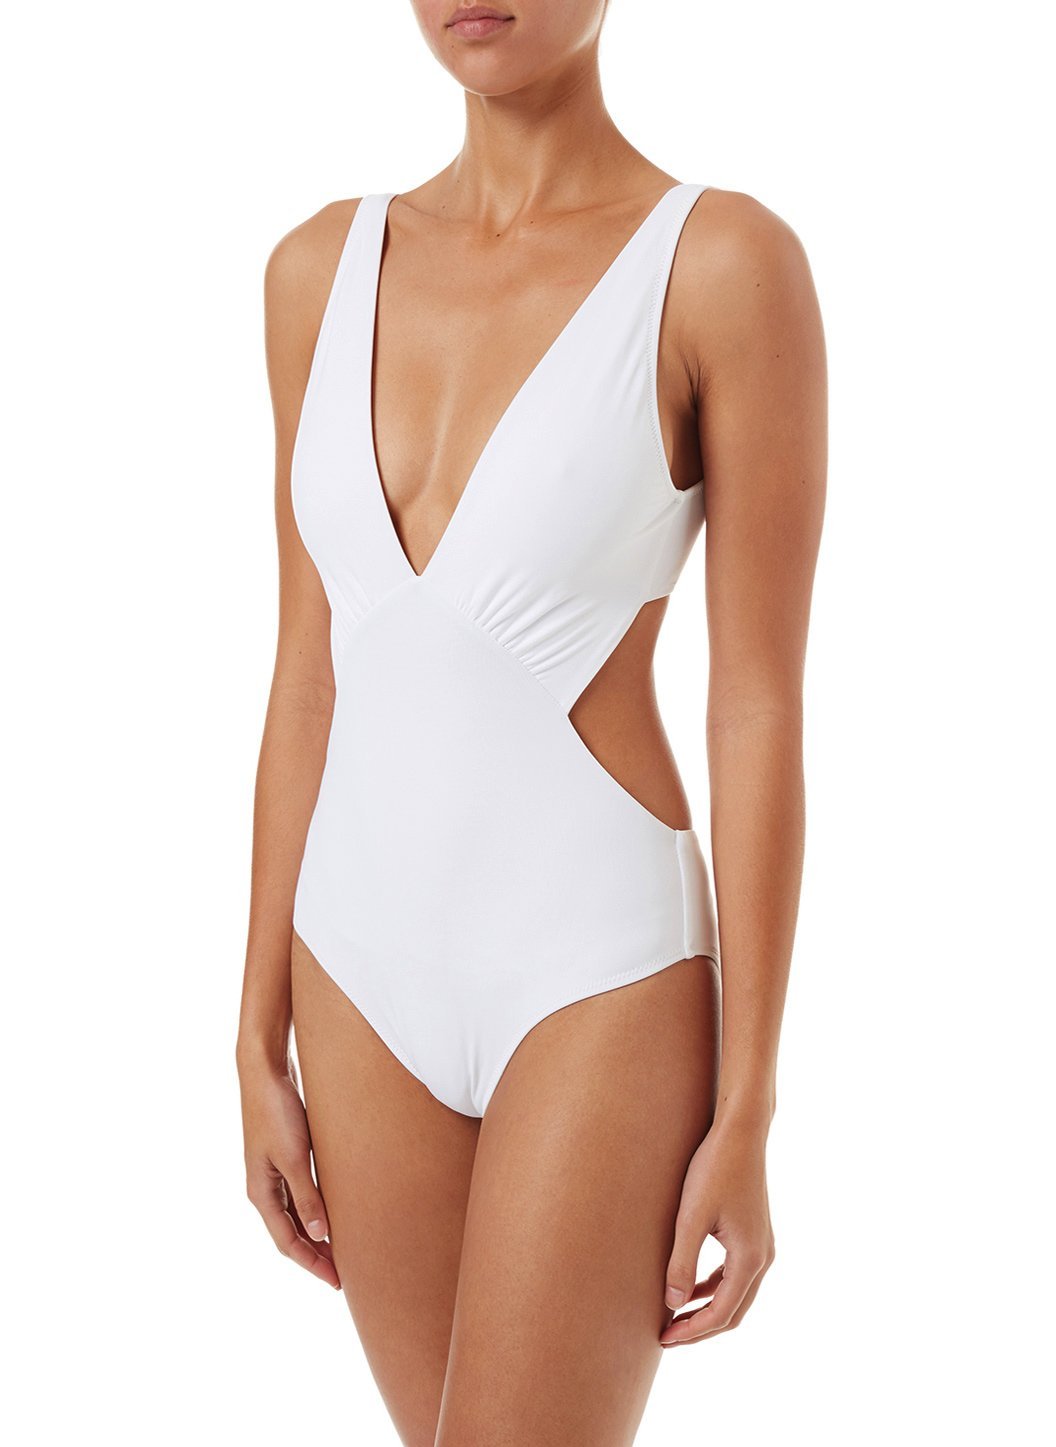 delmar white overtheshoulder vneck cutout onepiece swimsuit 2019 F